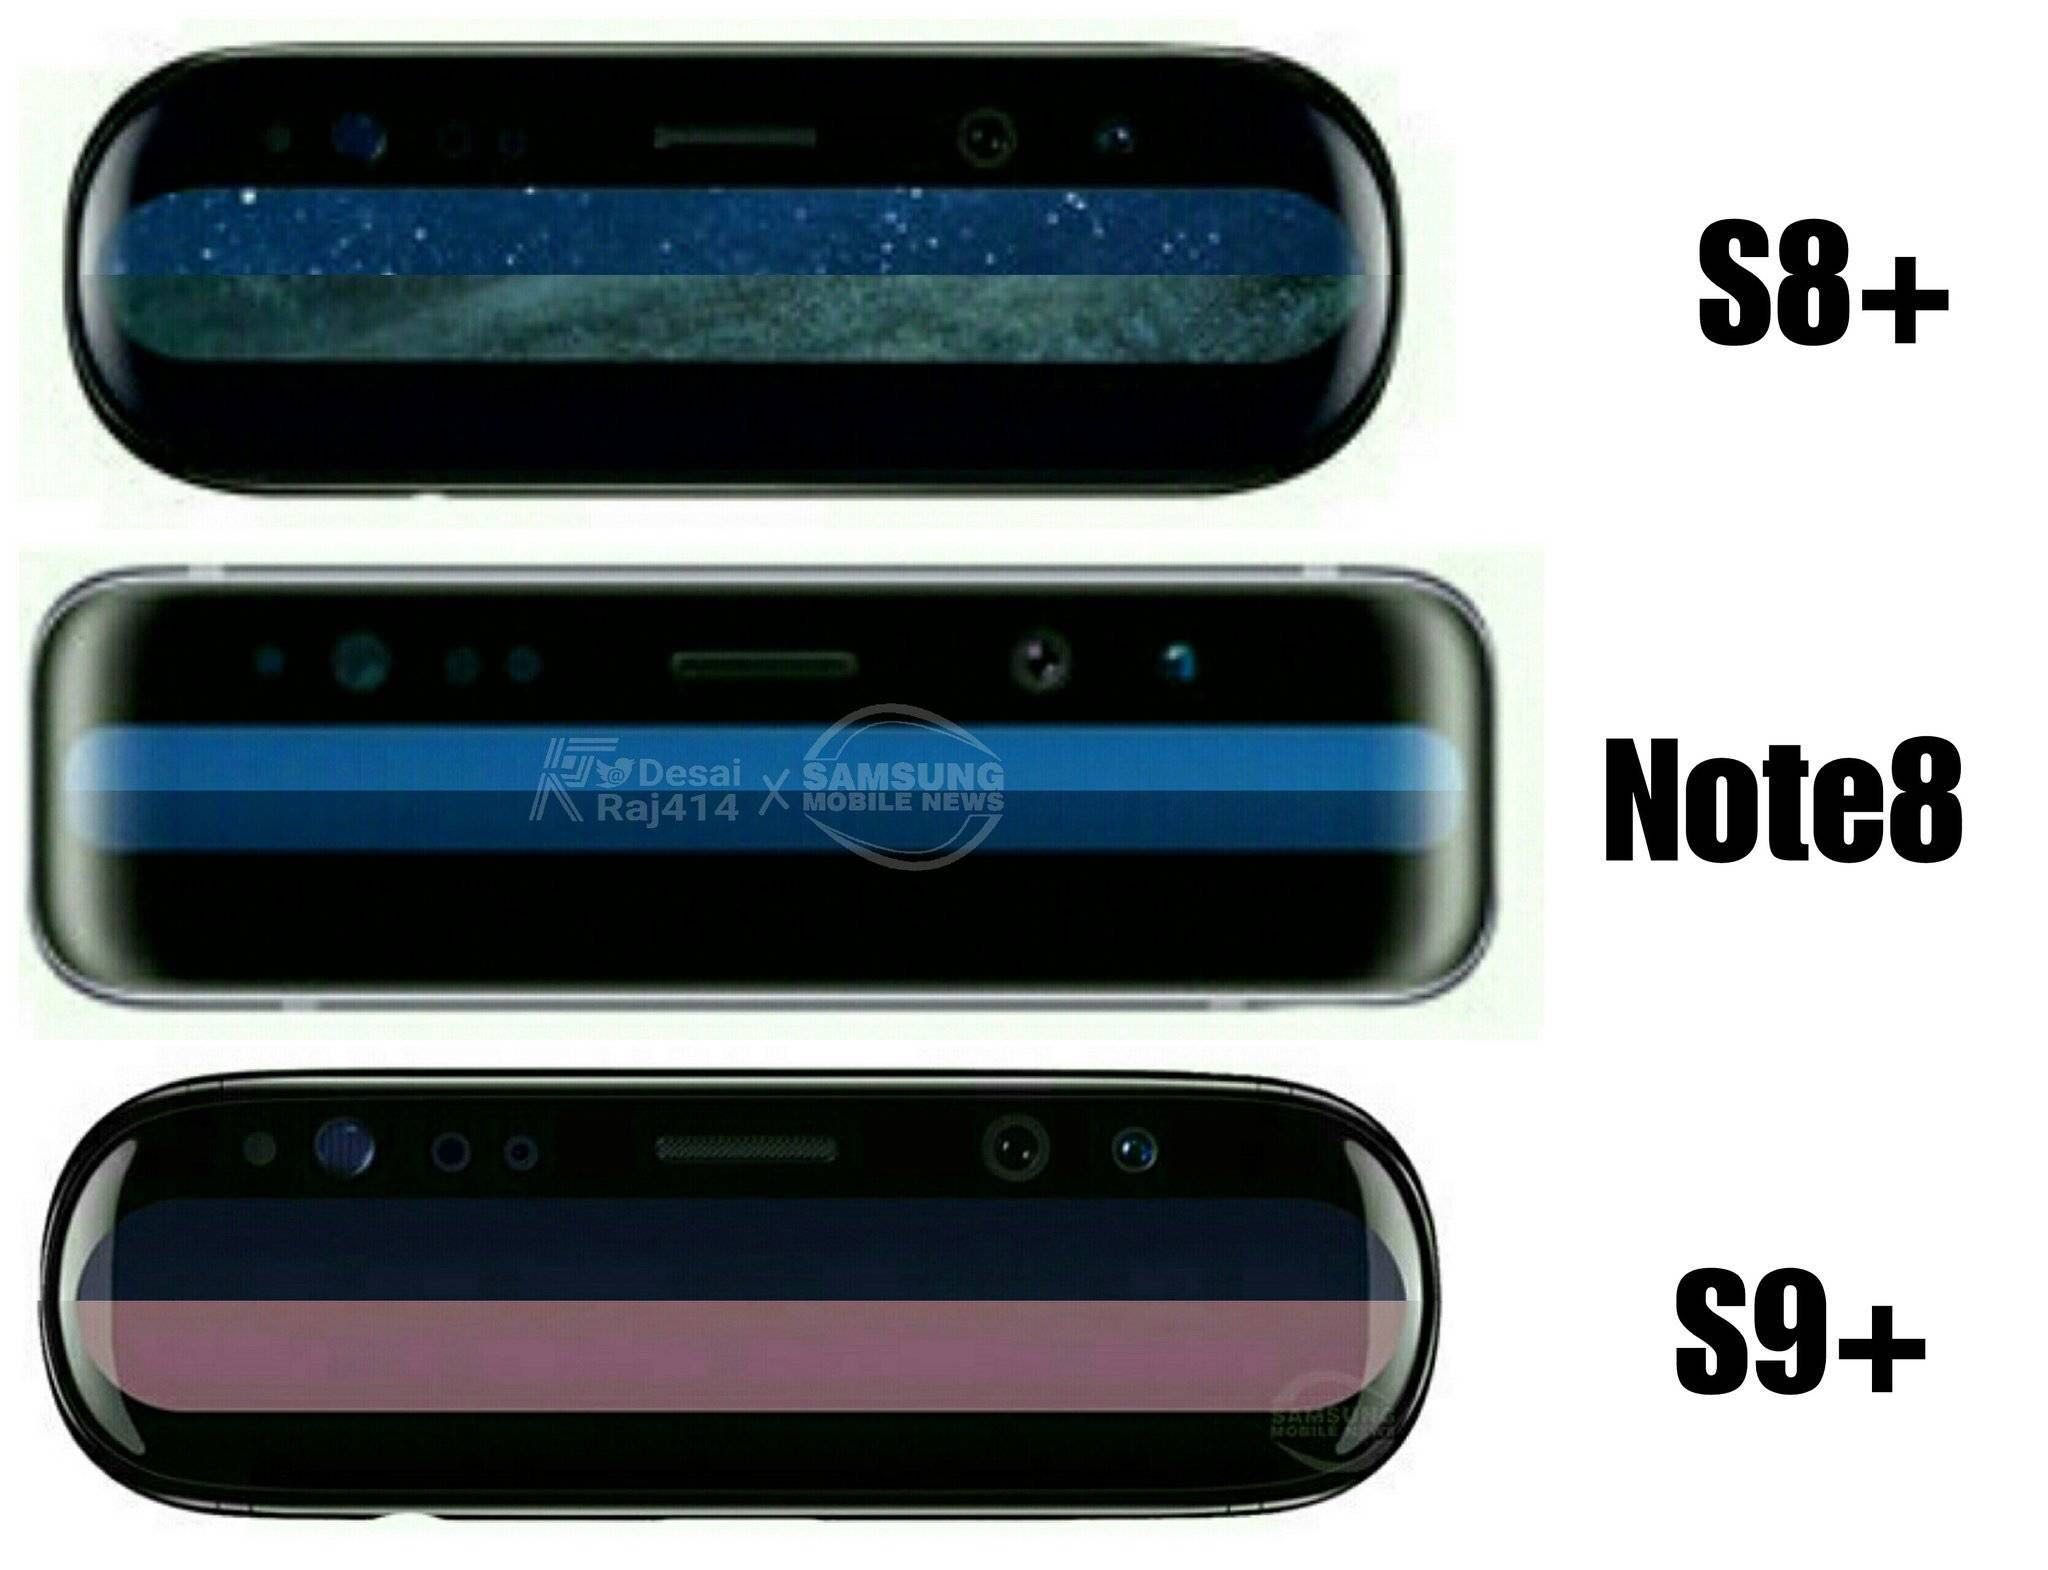 三星S8+、Note8、S9+ 细节外观对比